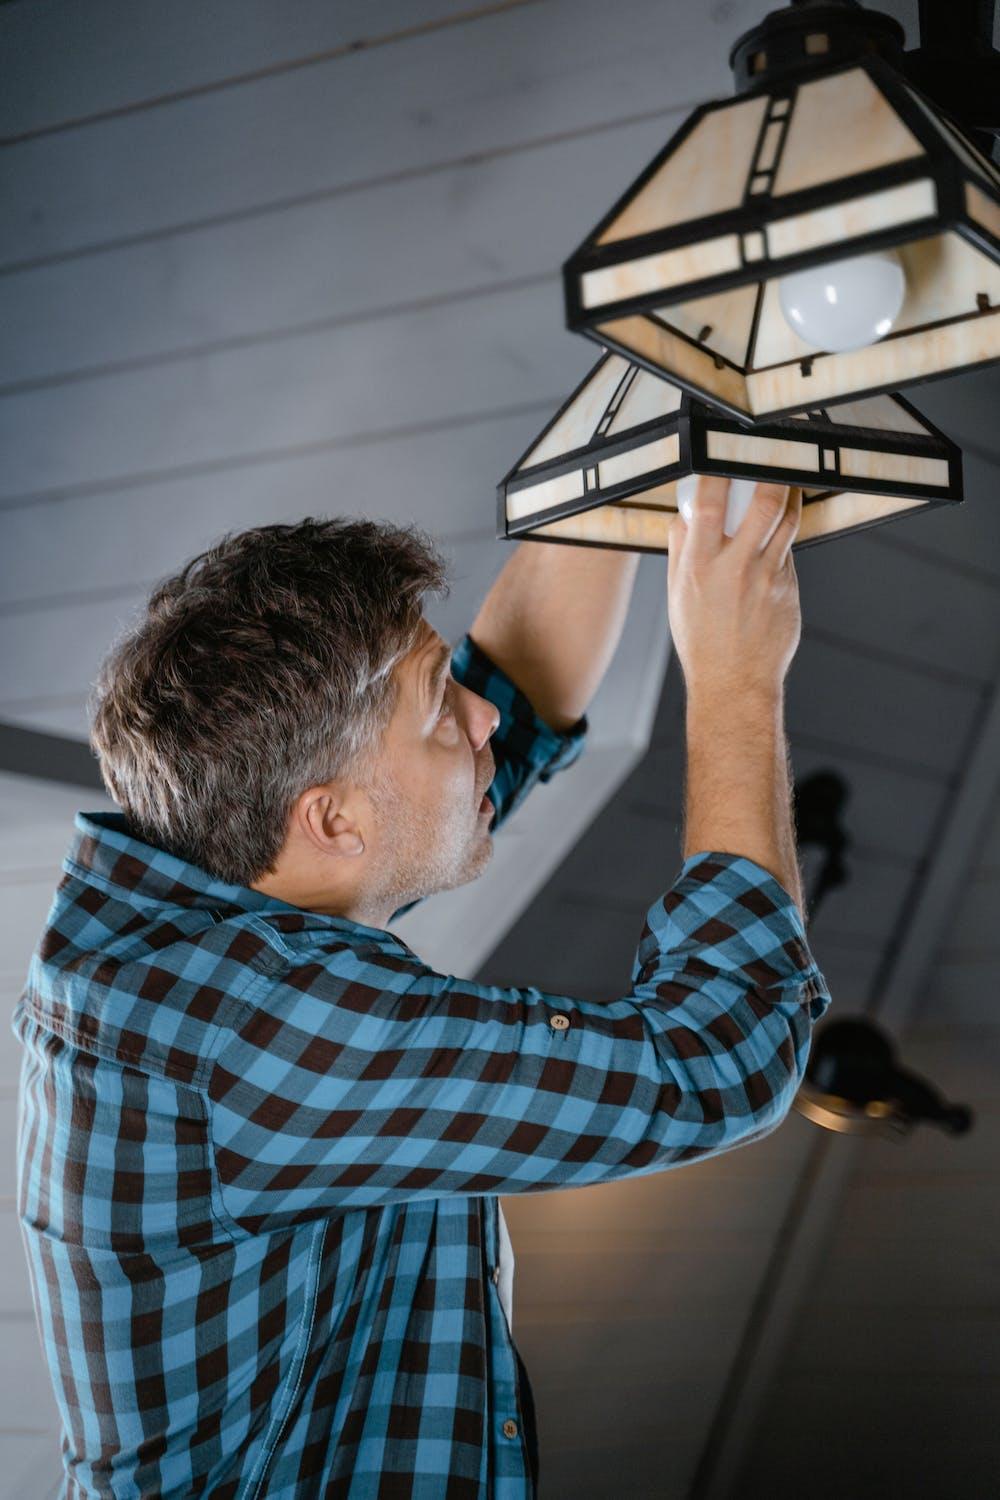 An image of a man fixing a light